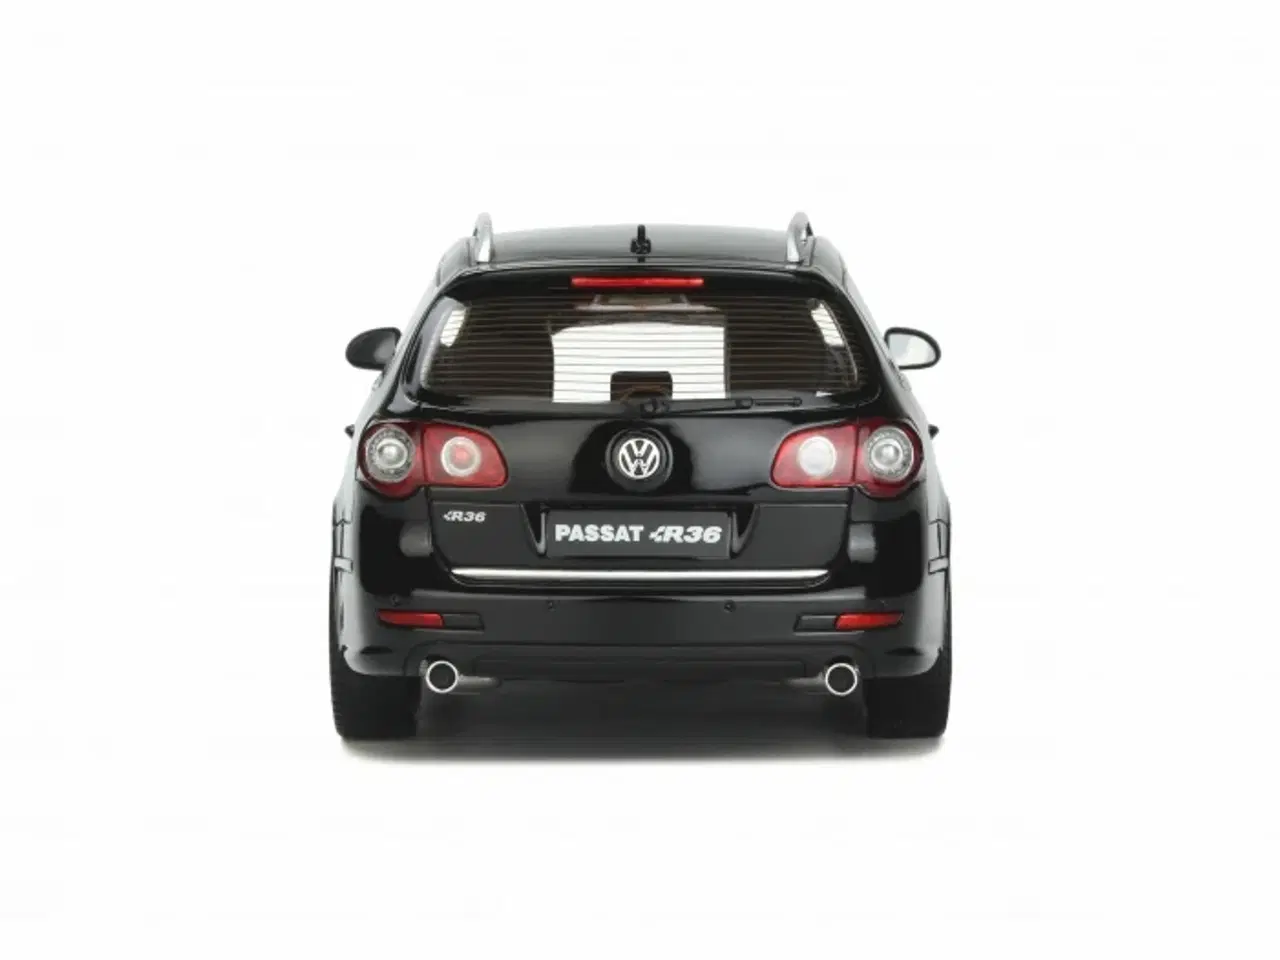 Billede 5 - 2008 VW Passat R36 - Limited Edition - 1:18  